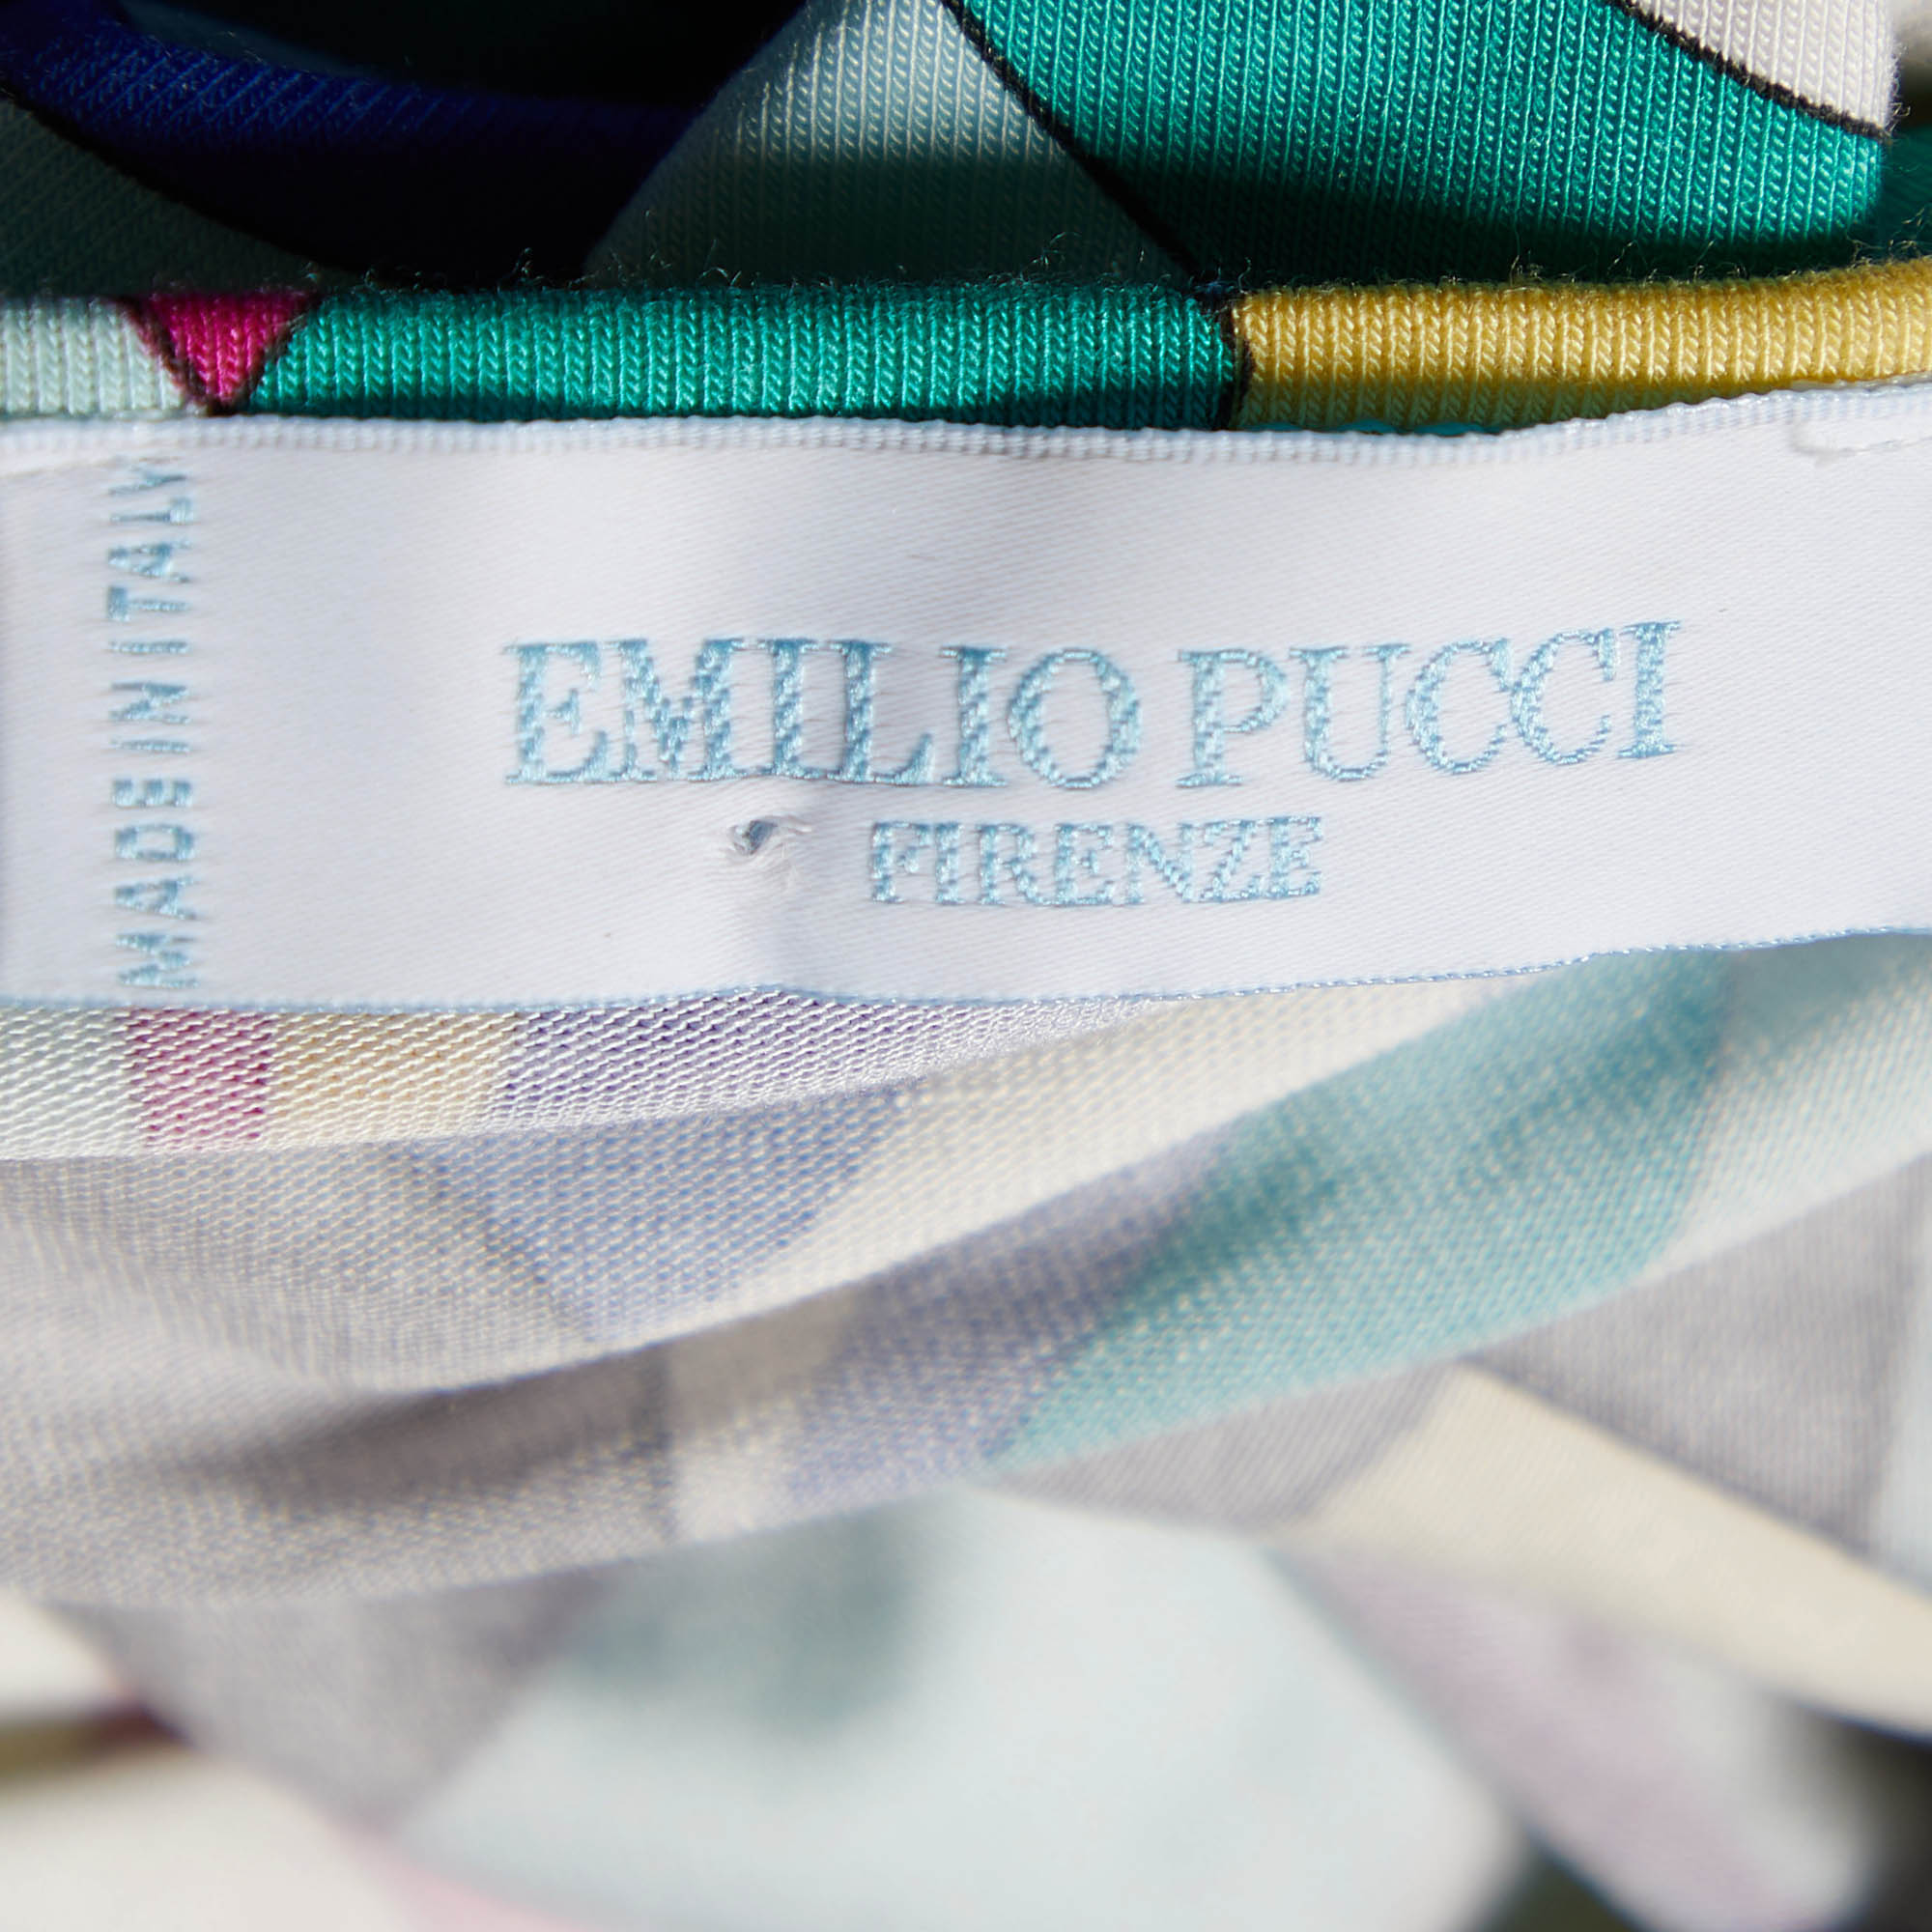 Emilio Pucci Multicolor Printed Knit V-Neck T-Shirt L